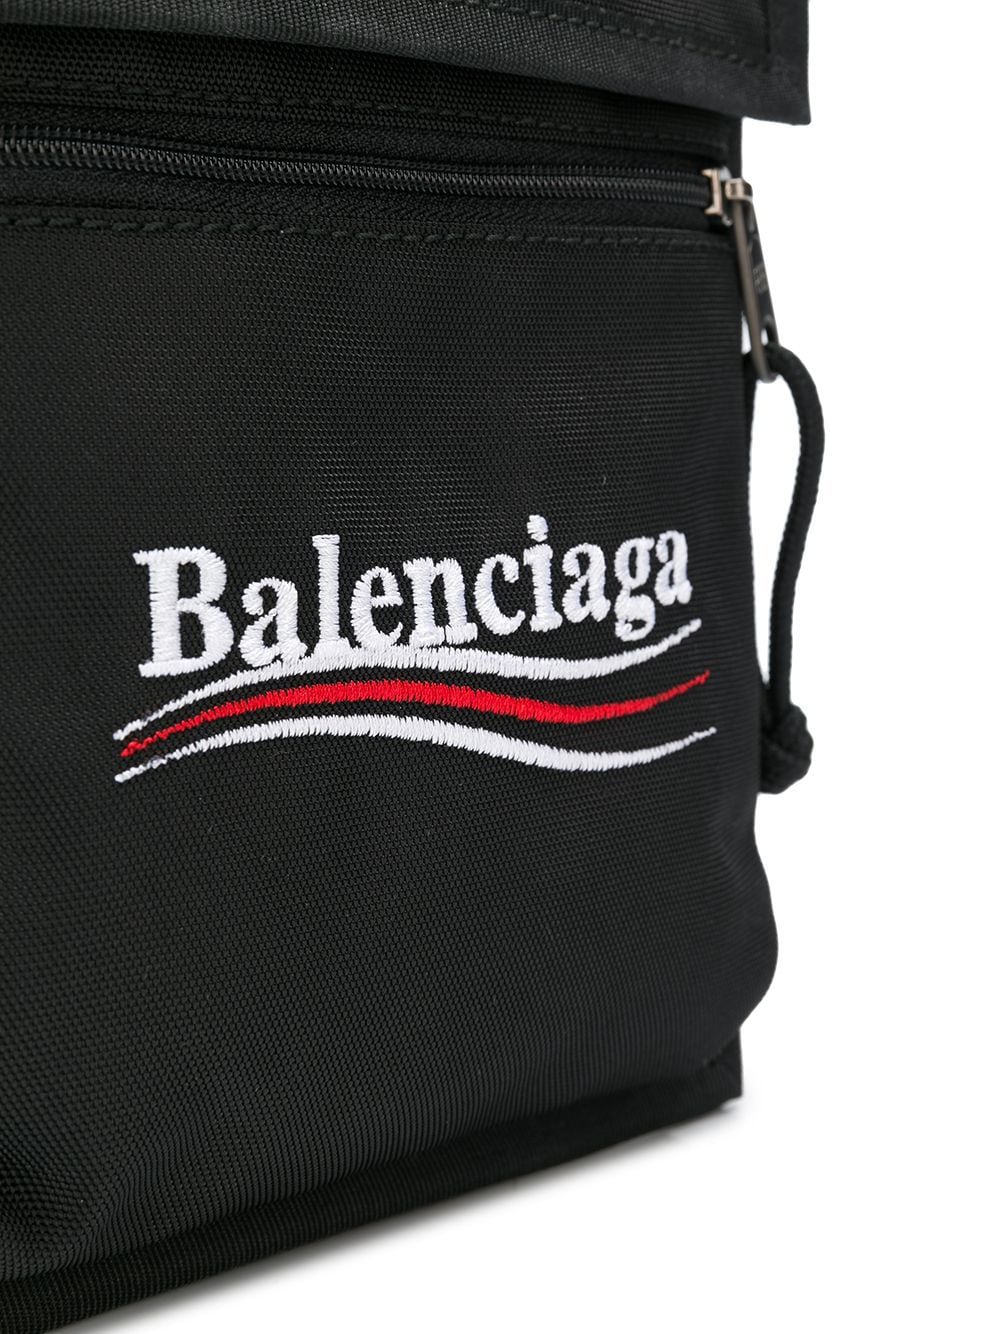 фото Balenciaga сумка с логотипом